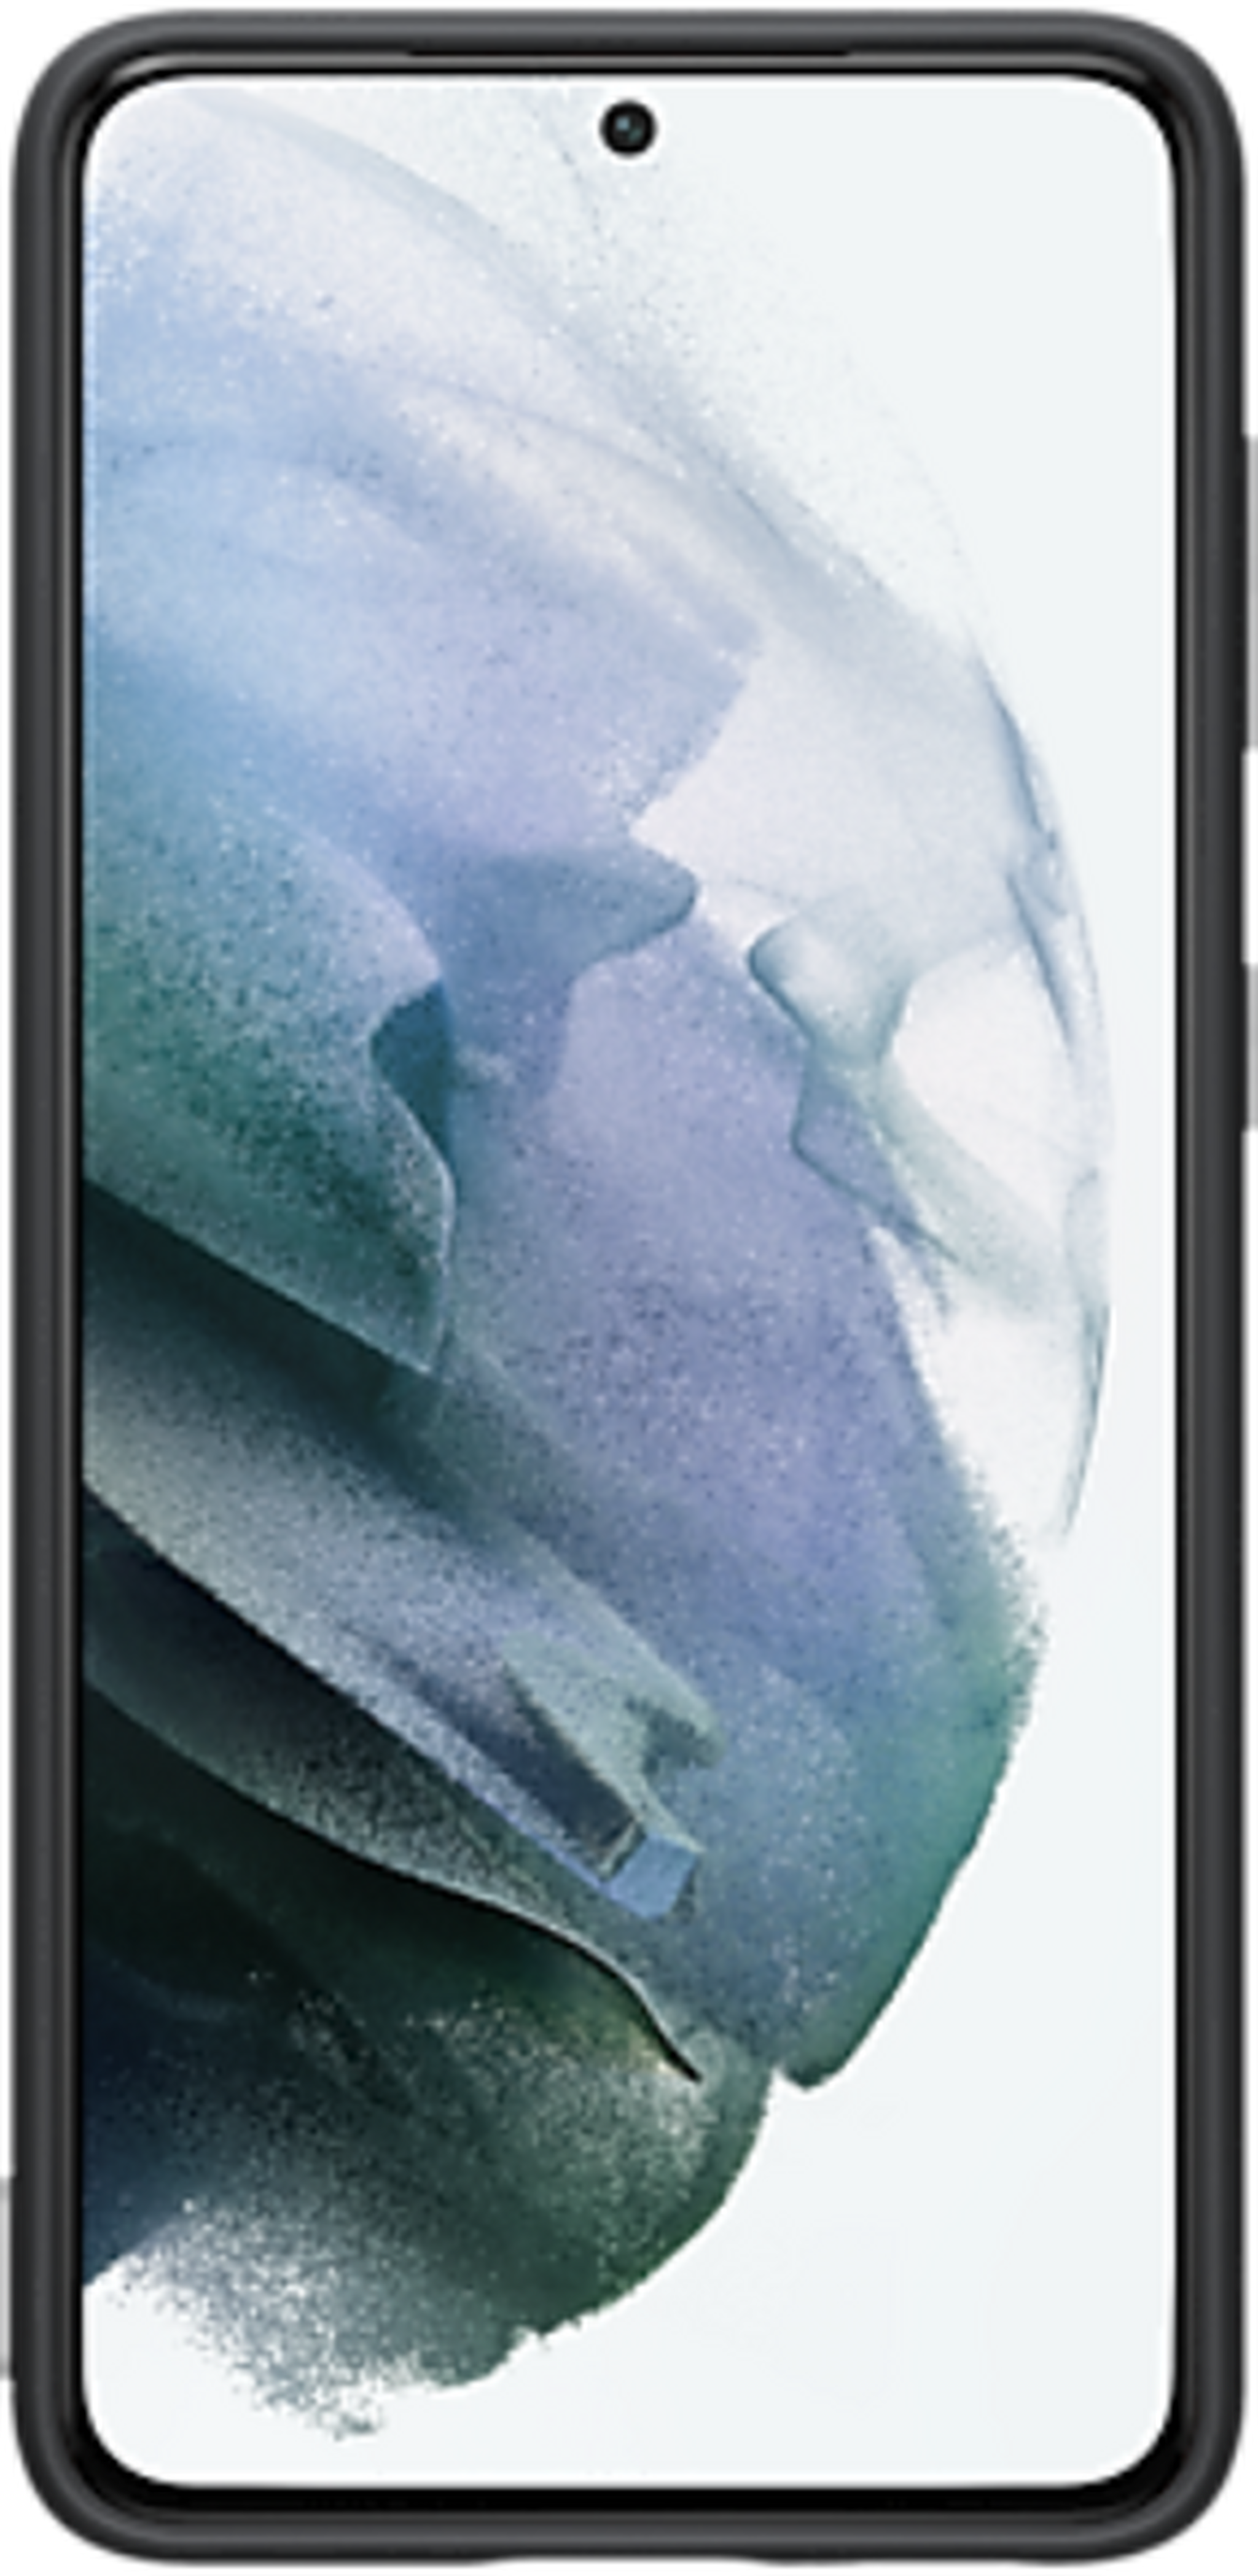 Samsung Galaxy S21 Silicone Cover (PG991TB) - Black